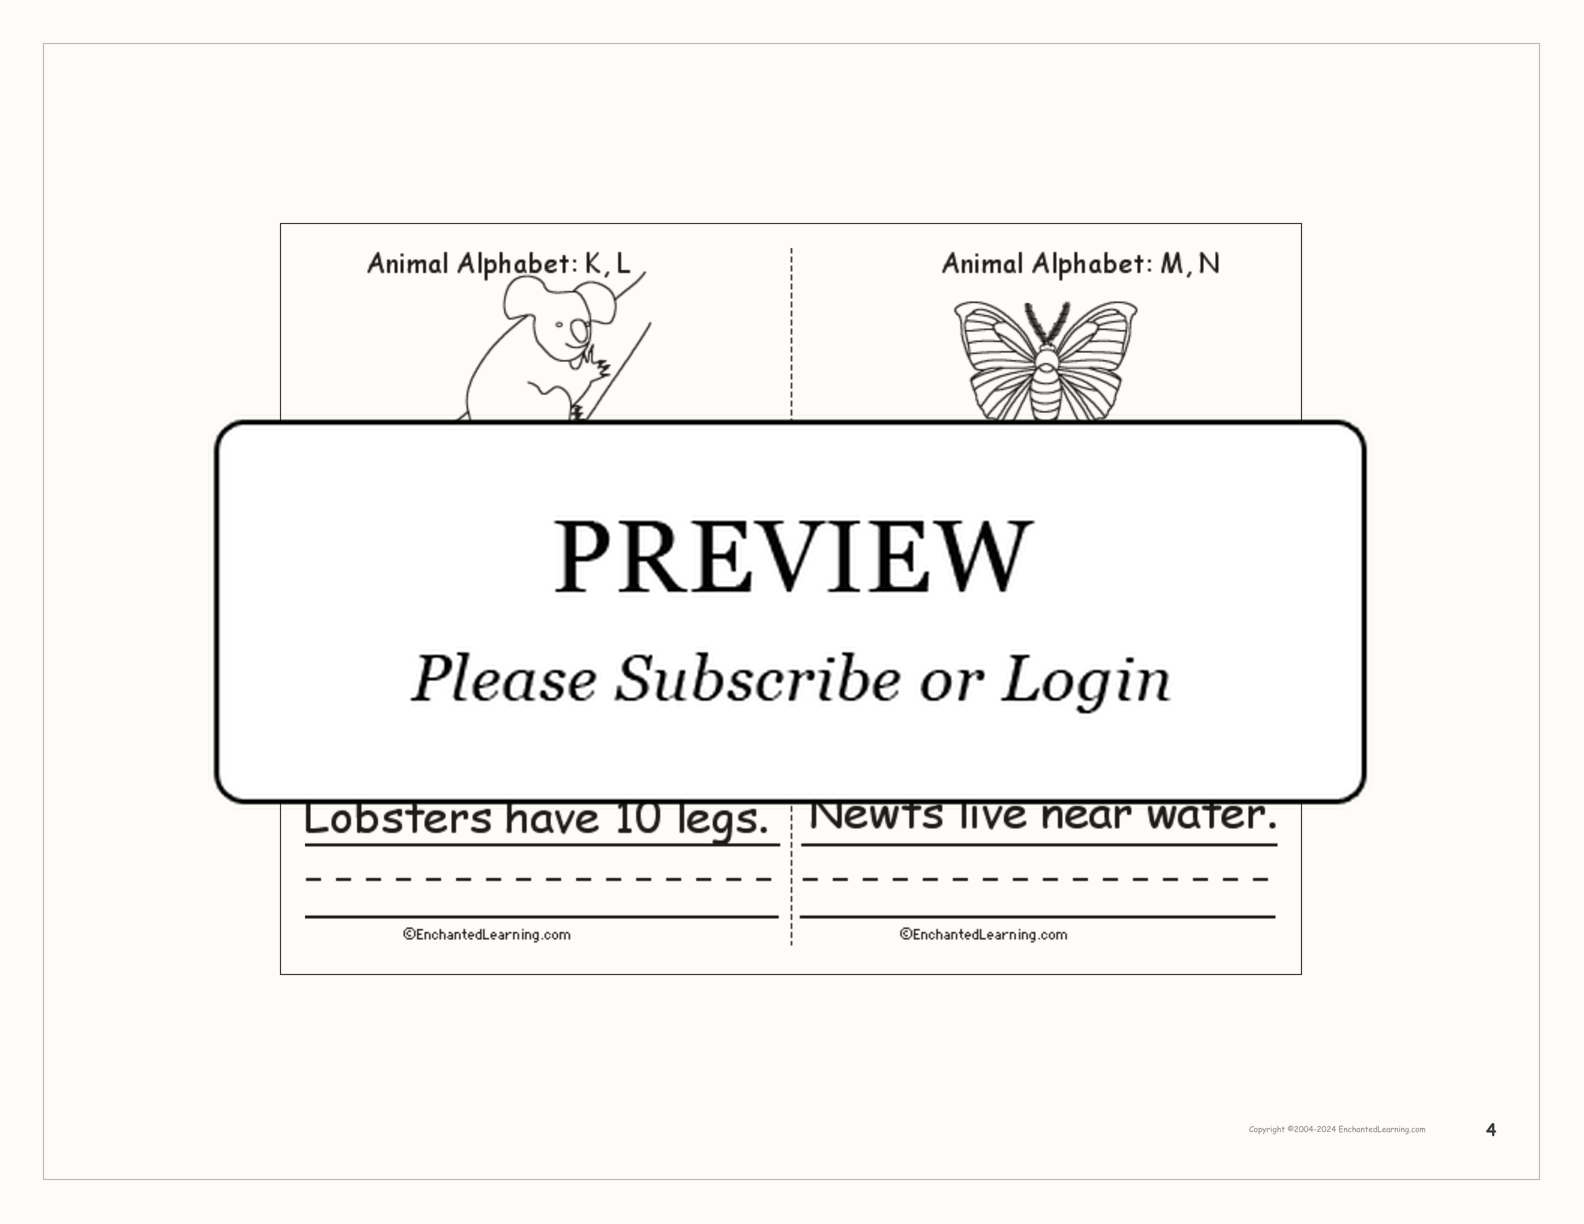 Animal Alphabet Book interactive printout page 4